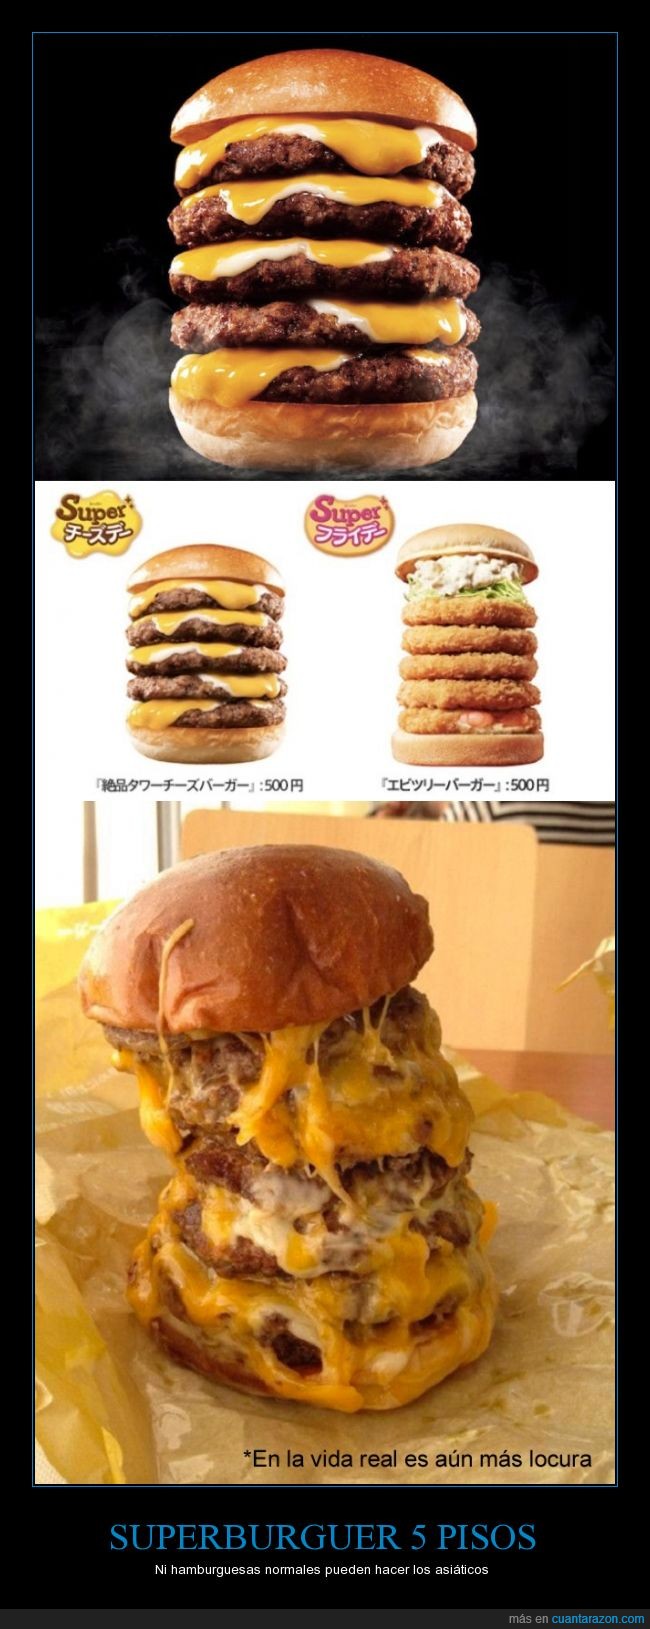 super,hamburguesa,burger,burguer,vida,real,locura,carne,queso,gigante,colesterol,comer,comida